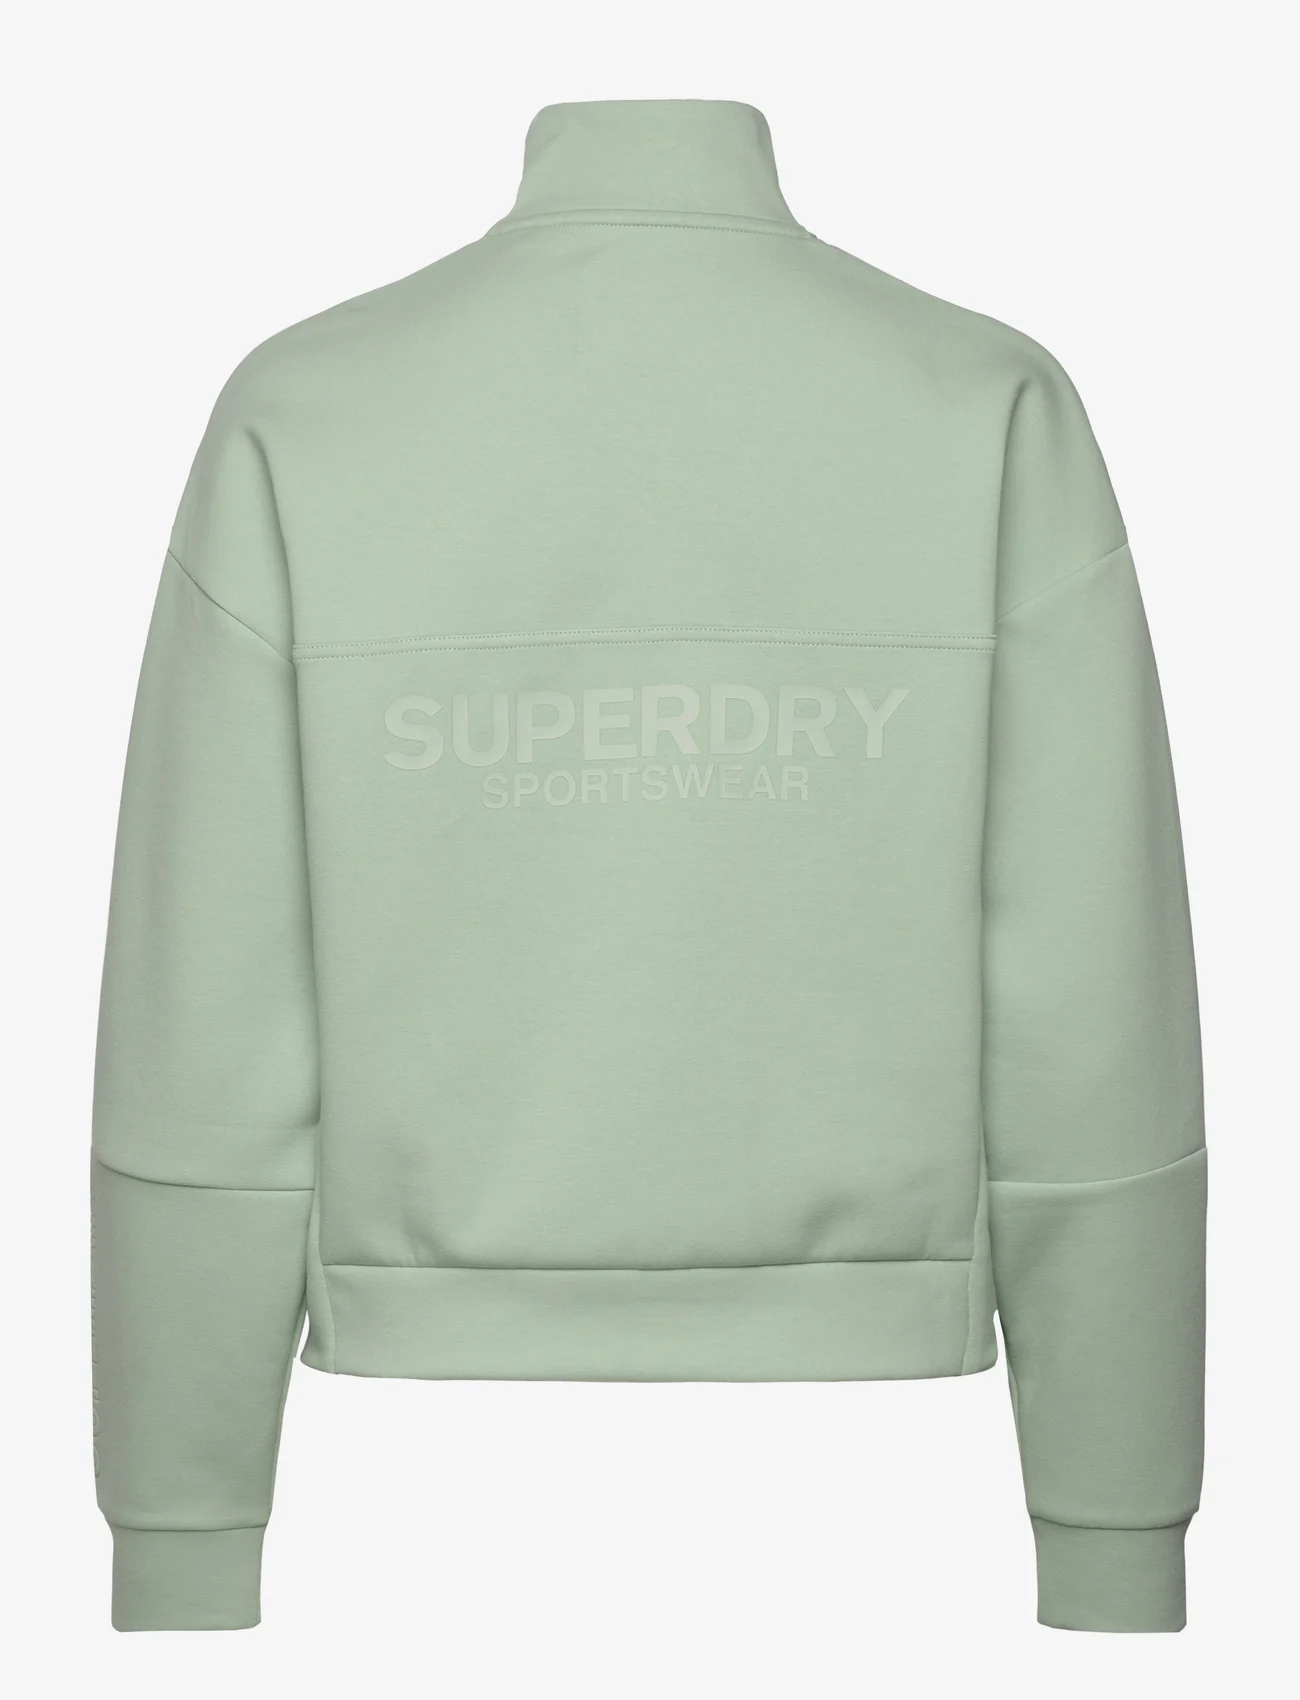 Superdry Sport - SPORT TECH RELAXED HALF ZIP - sweatshirts - sea green - 1